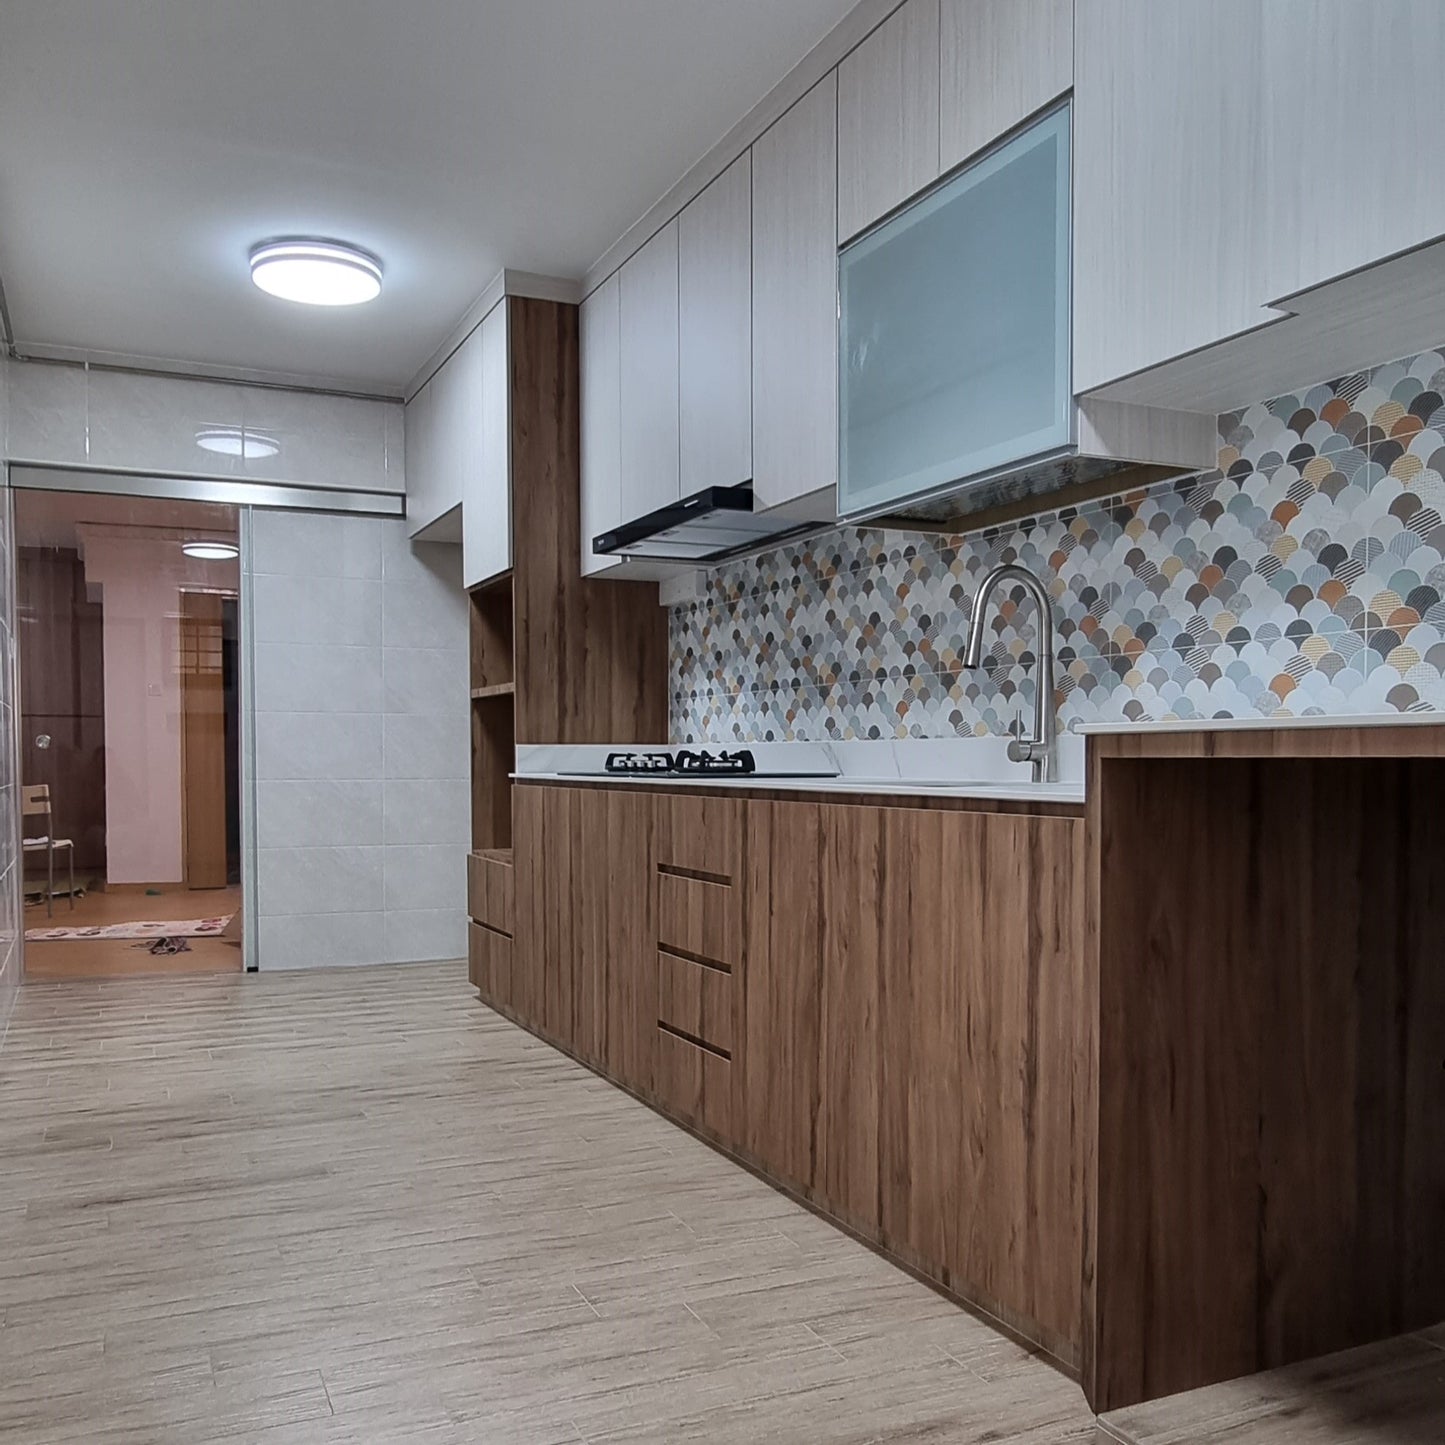 Kitchen cabinet - $120 per ft (minimum 10ft)